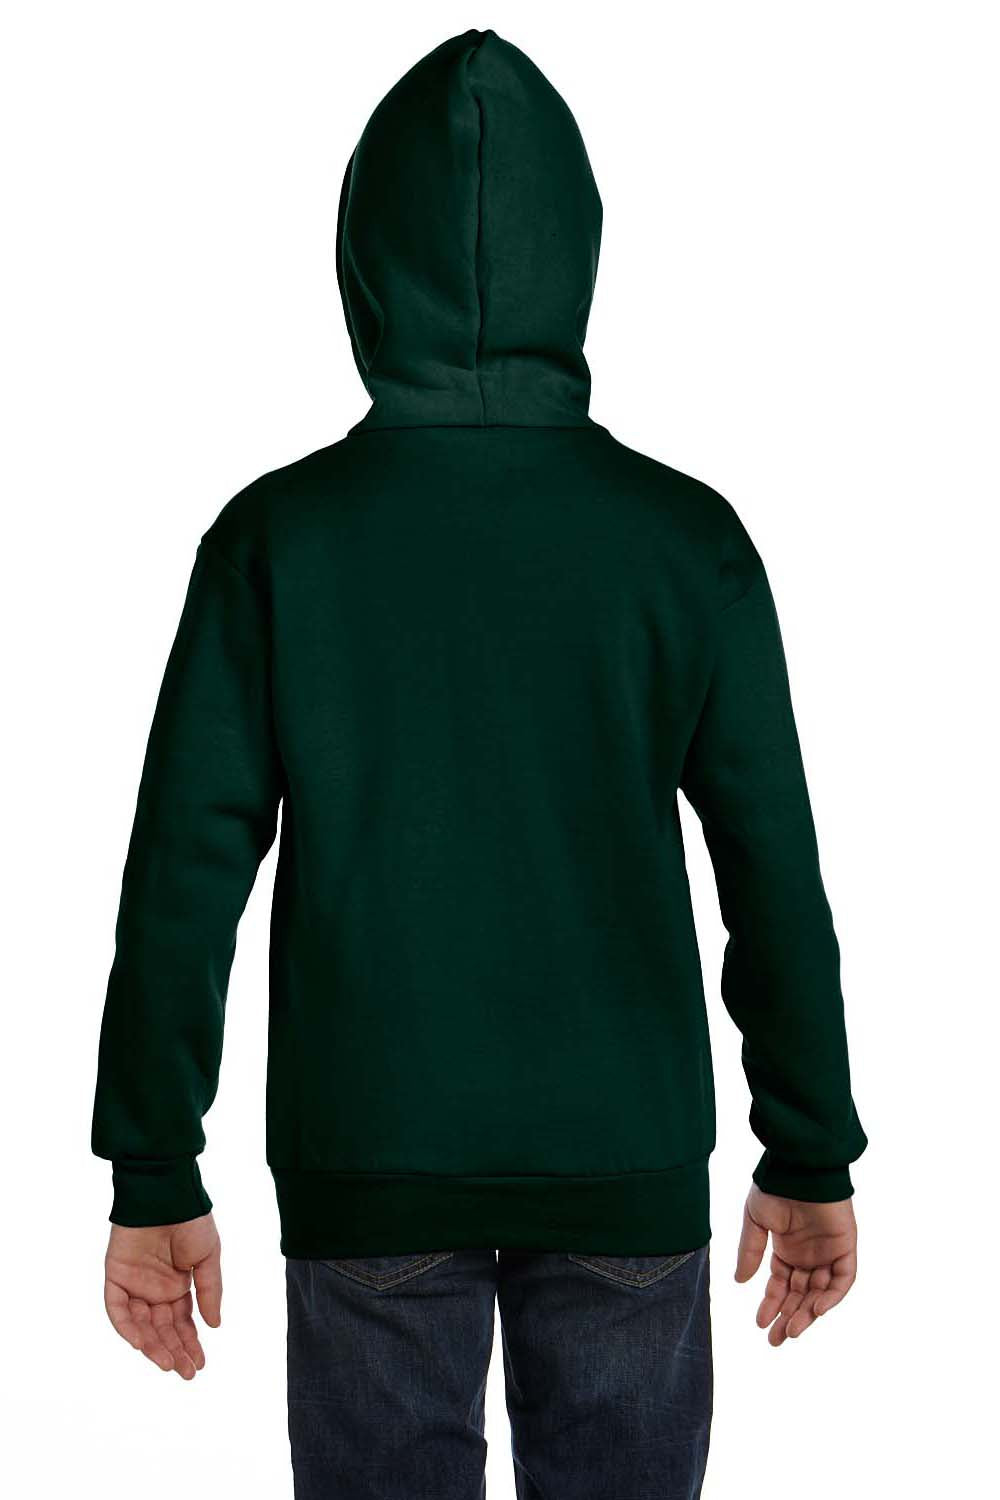 Hanes P480 Youth EcoSmart Print Pro XP Full Zip Hooded Sweatshirt Hoodie Forest Green Back